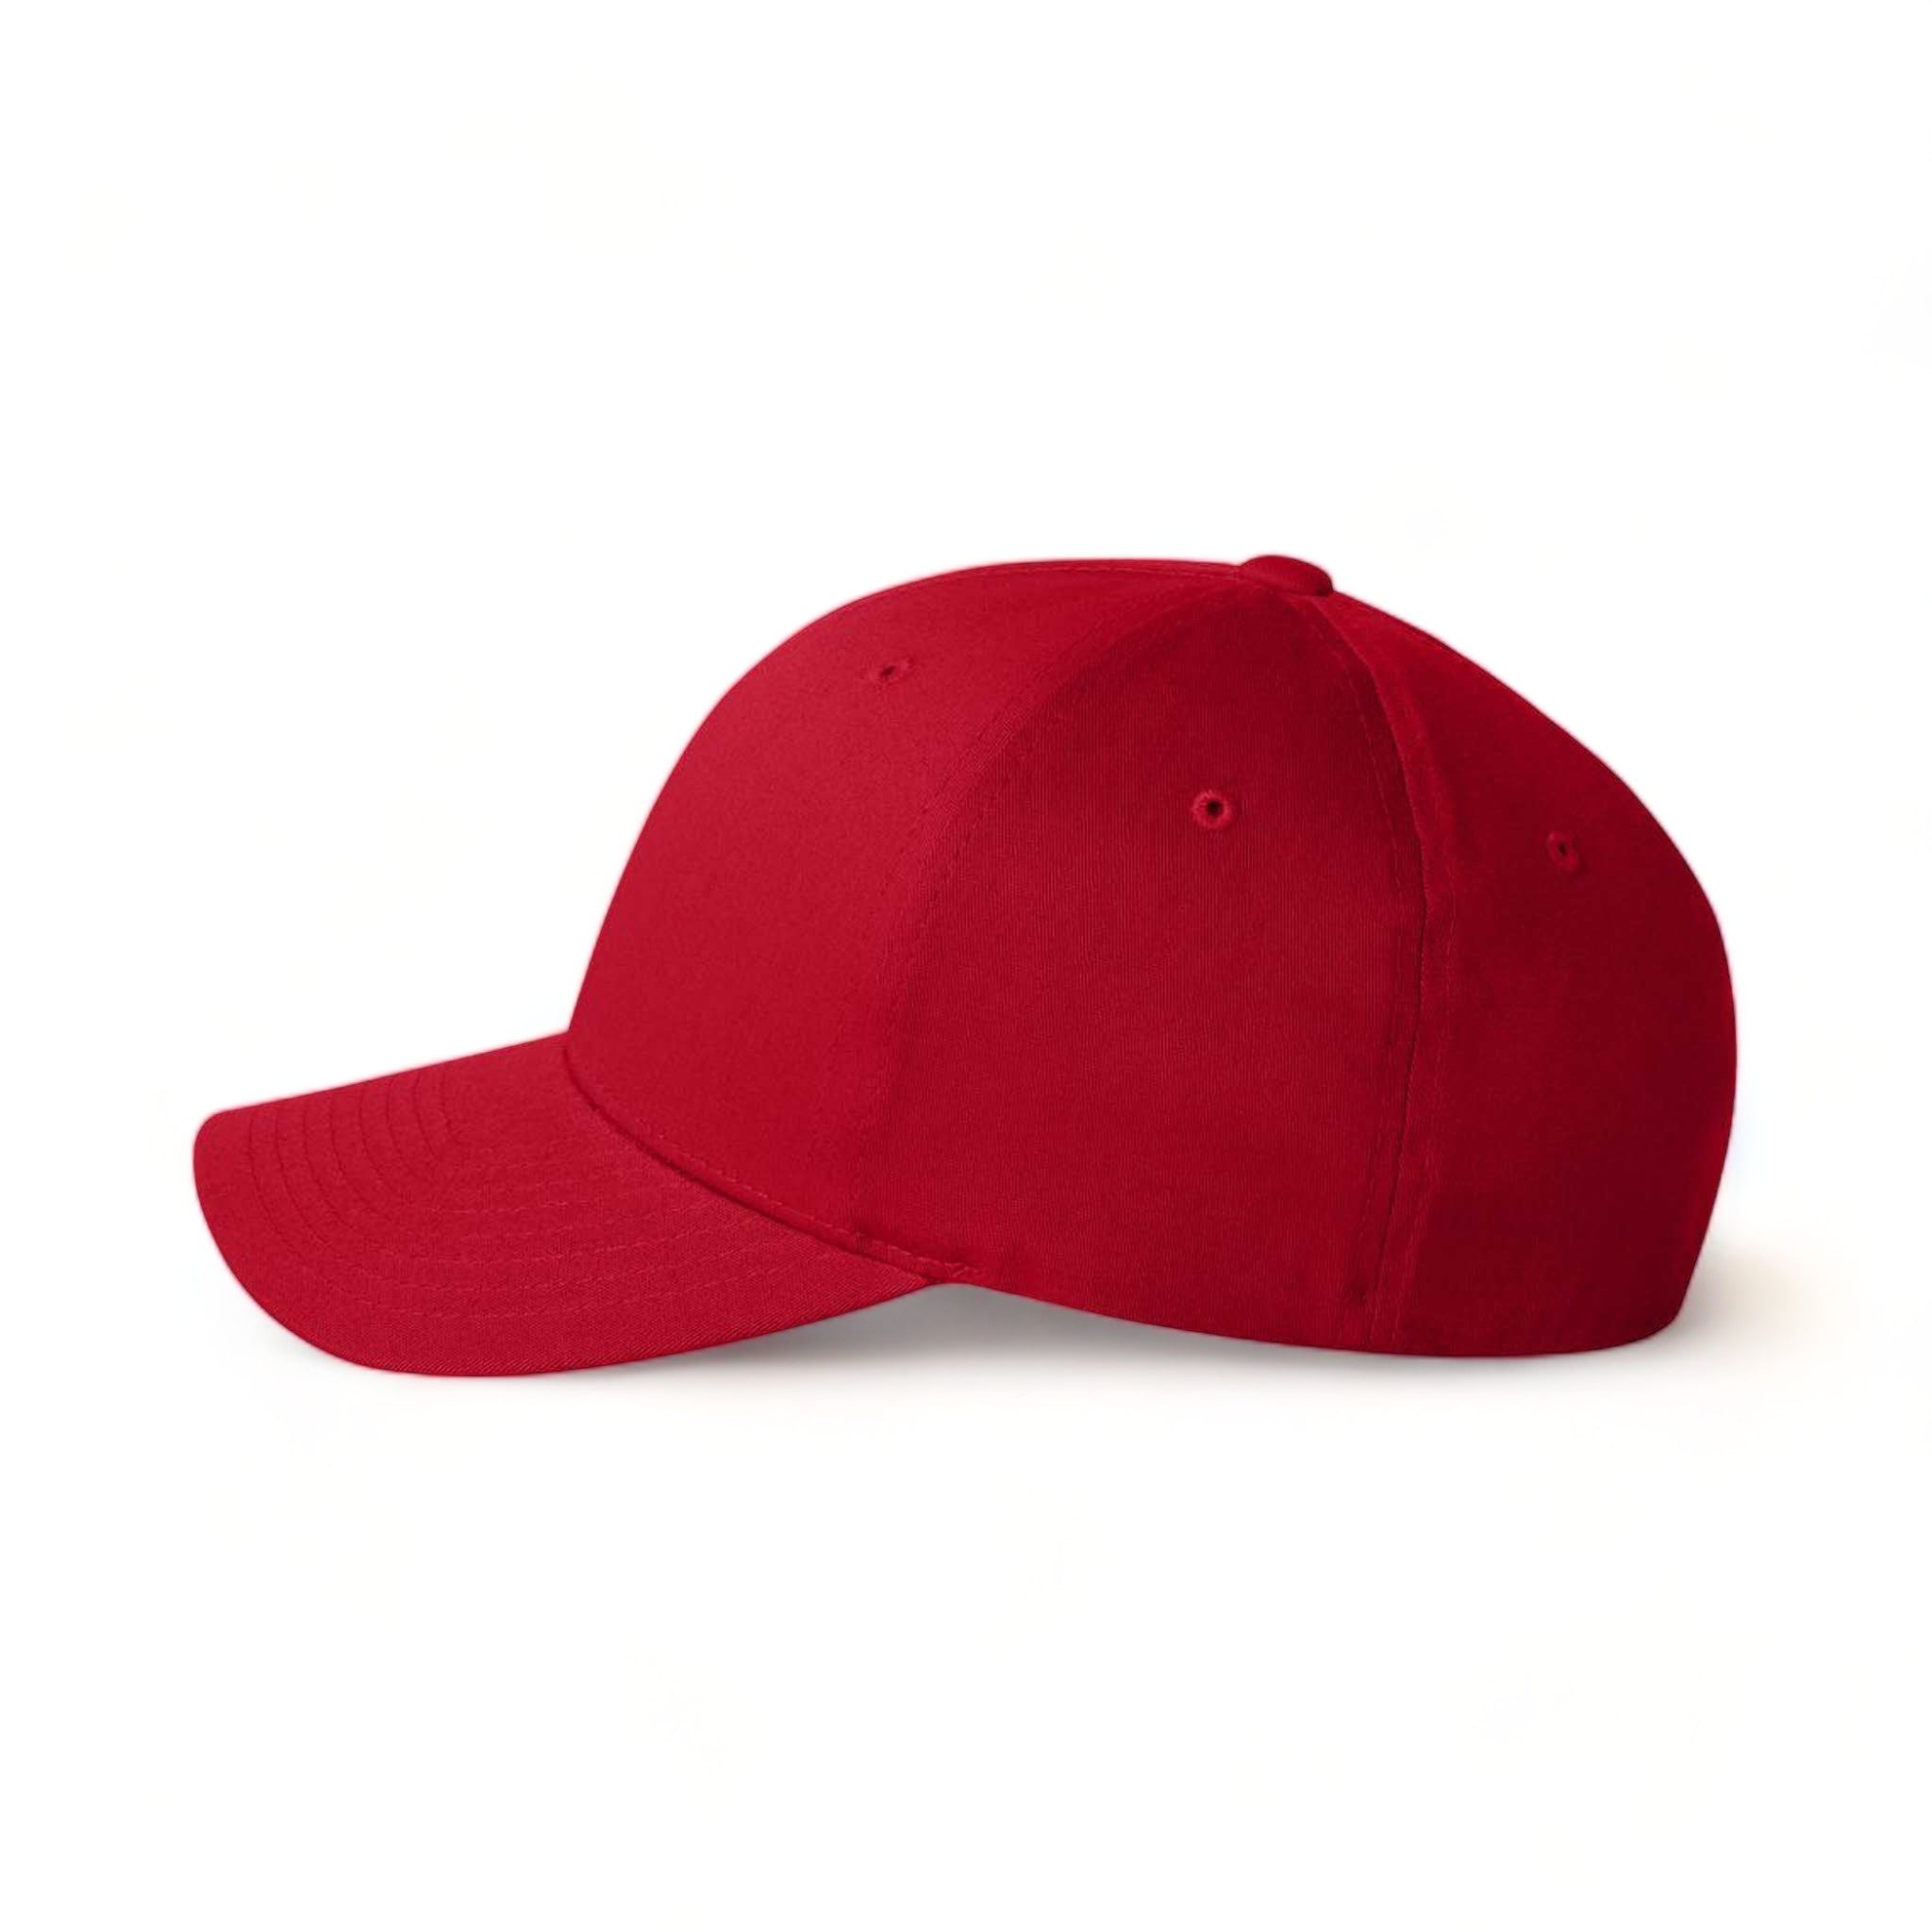 Side view of Flexfit 5001 custom hat in red